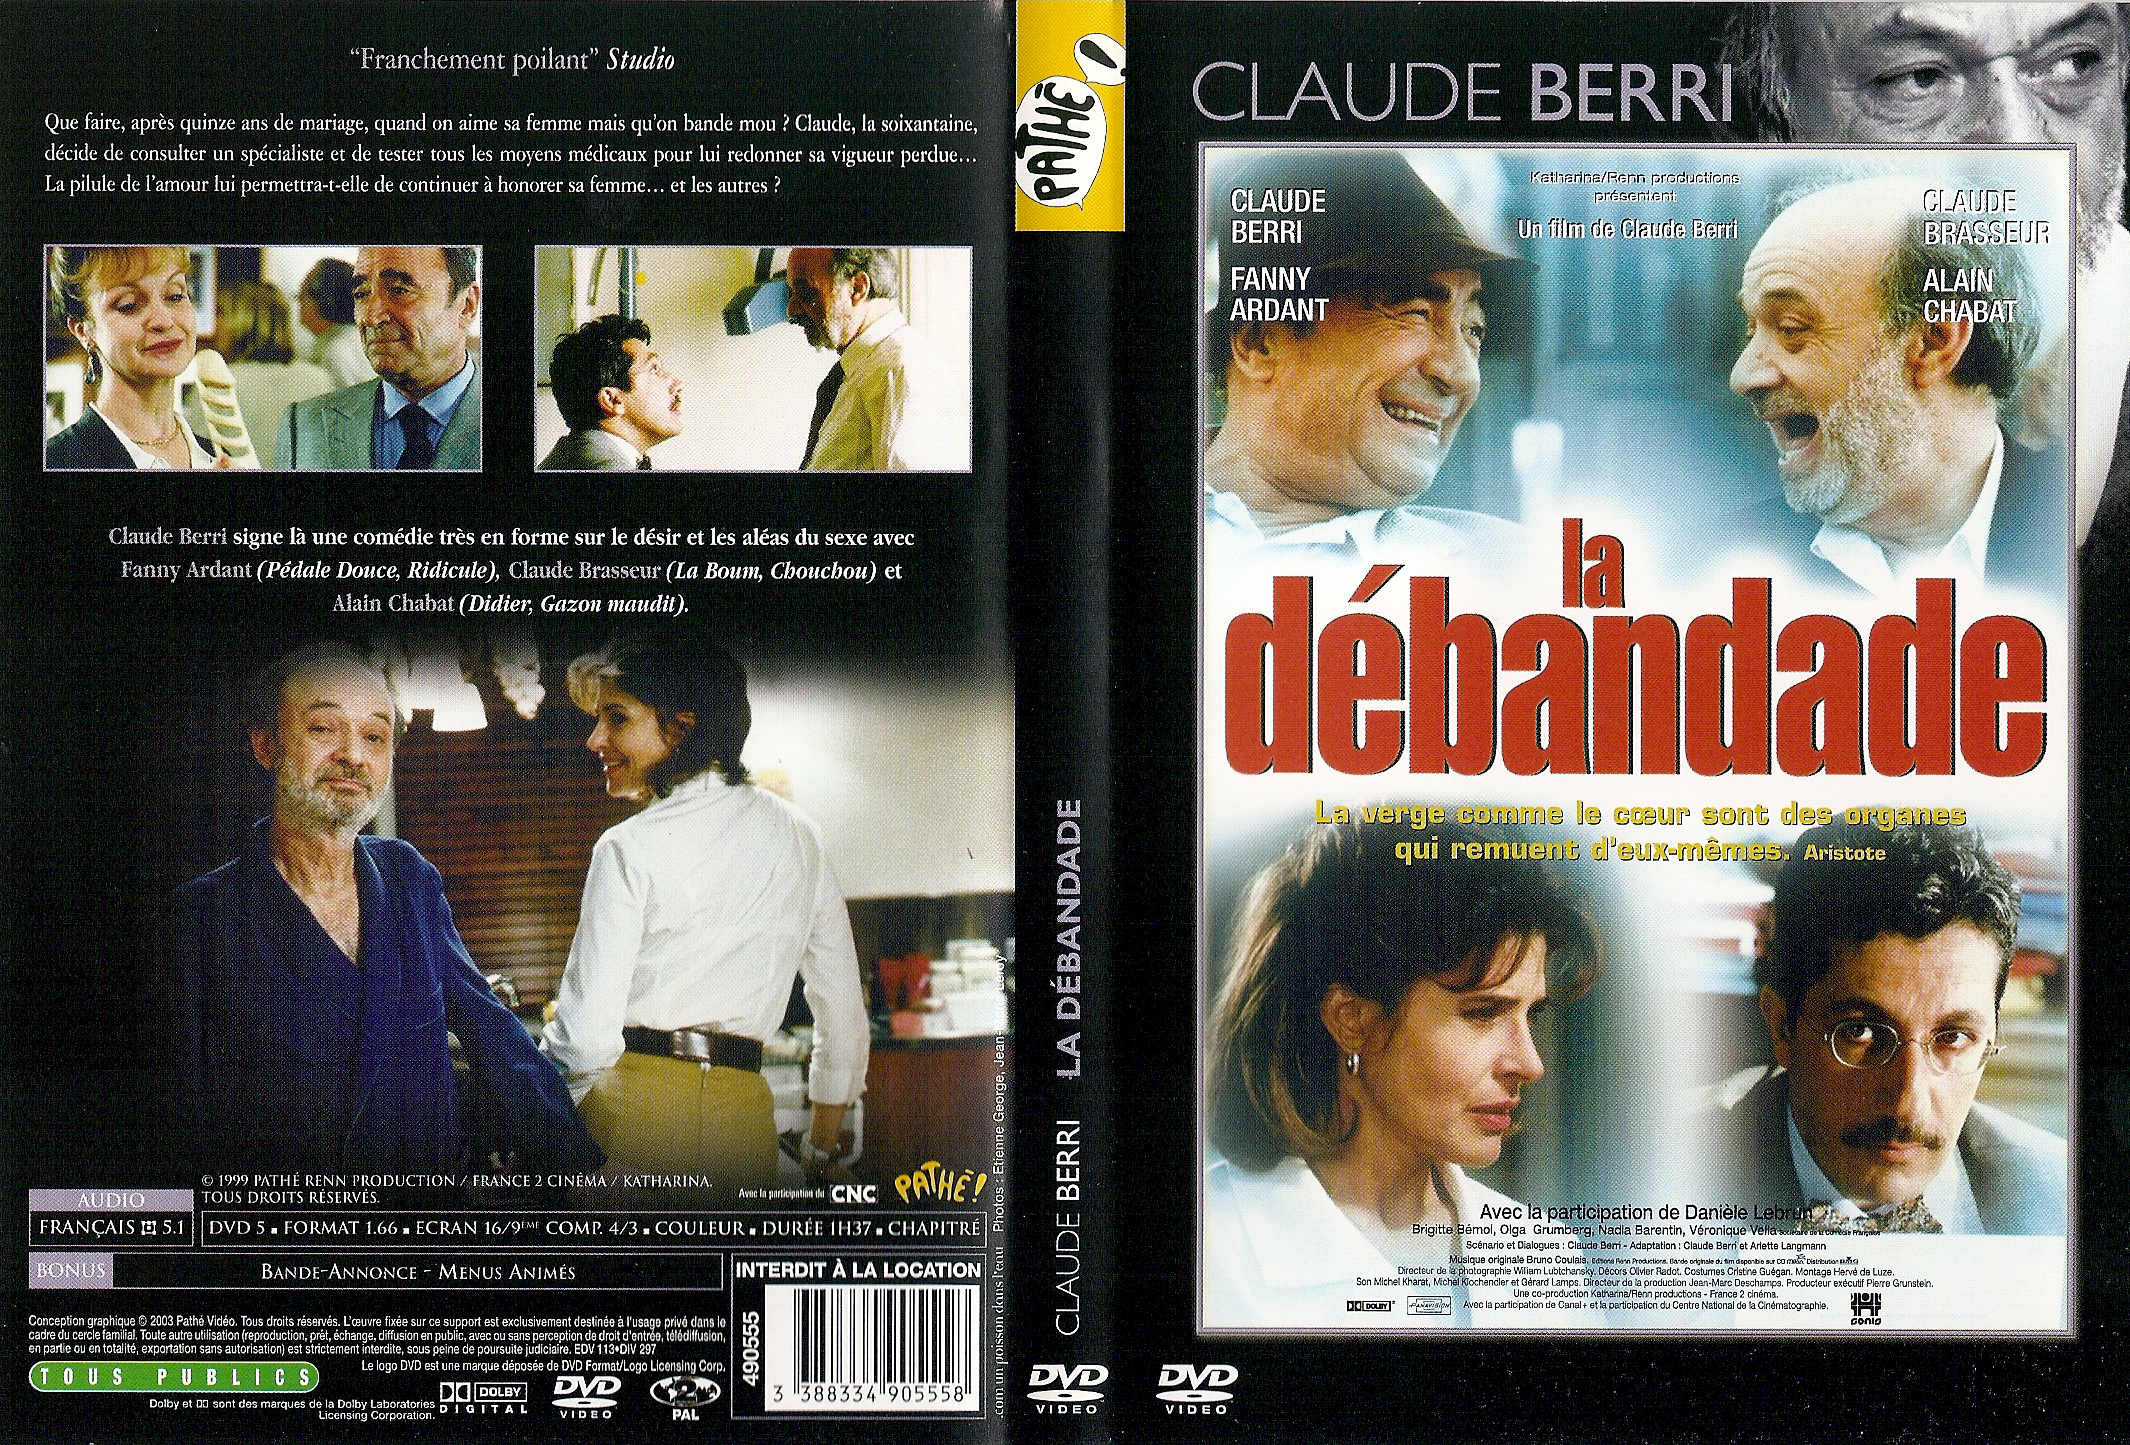 Jaquette DVD La dbandade